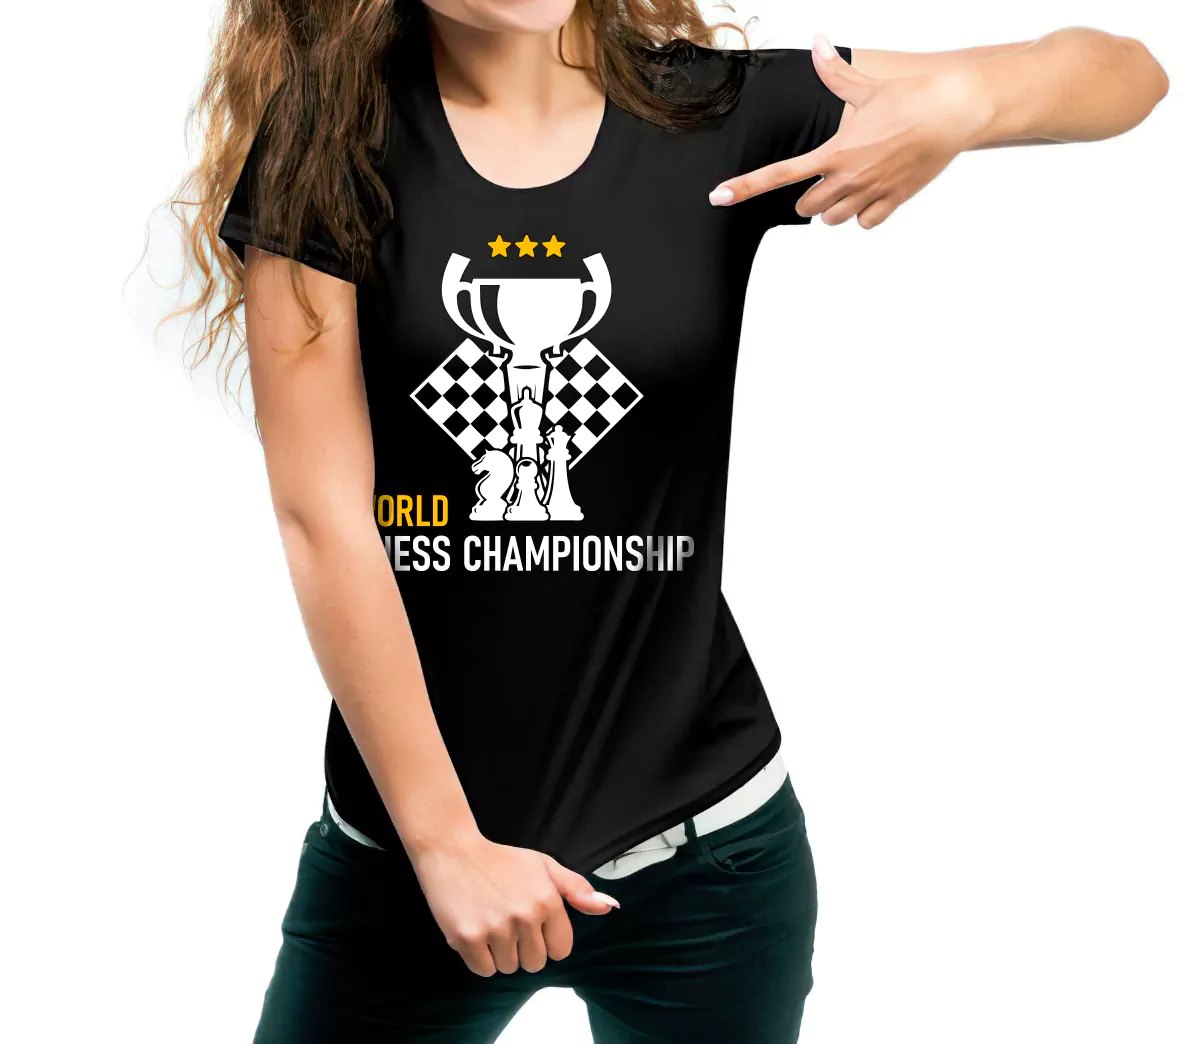 world chess championship t shirt for girls